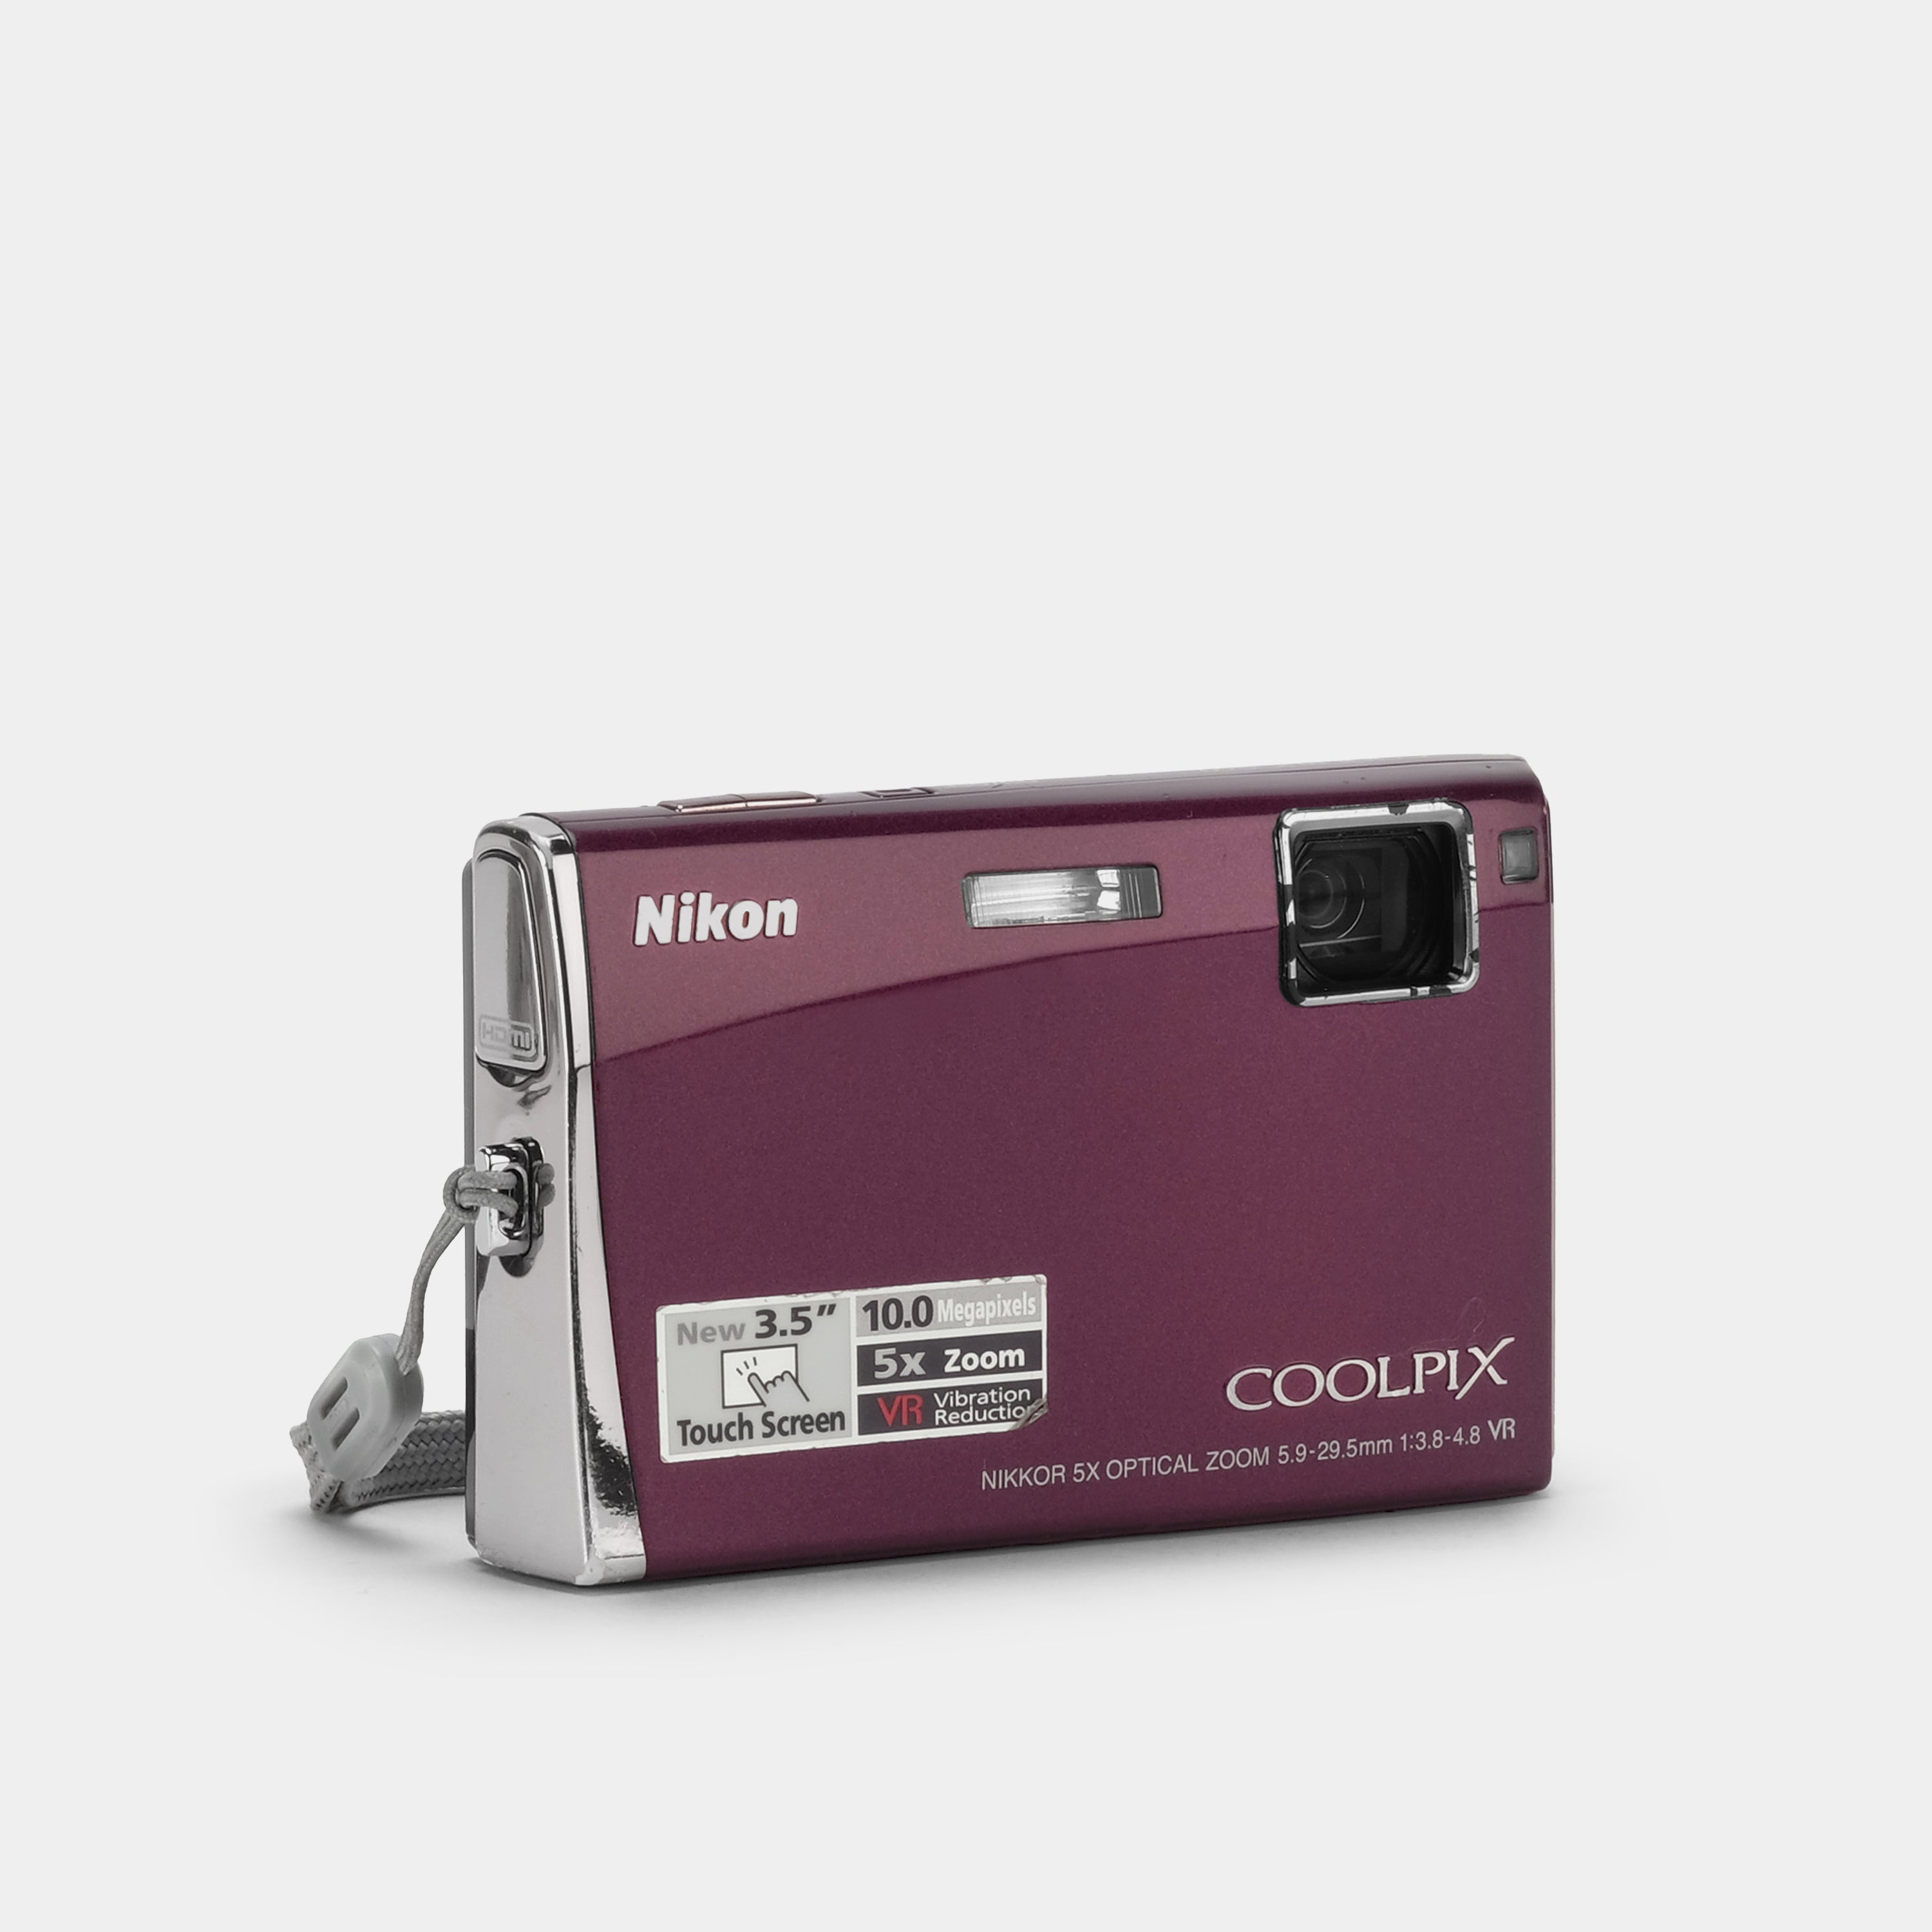 Nikon Coolpix S60 Digital Point and Shoot Camera